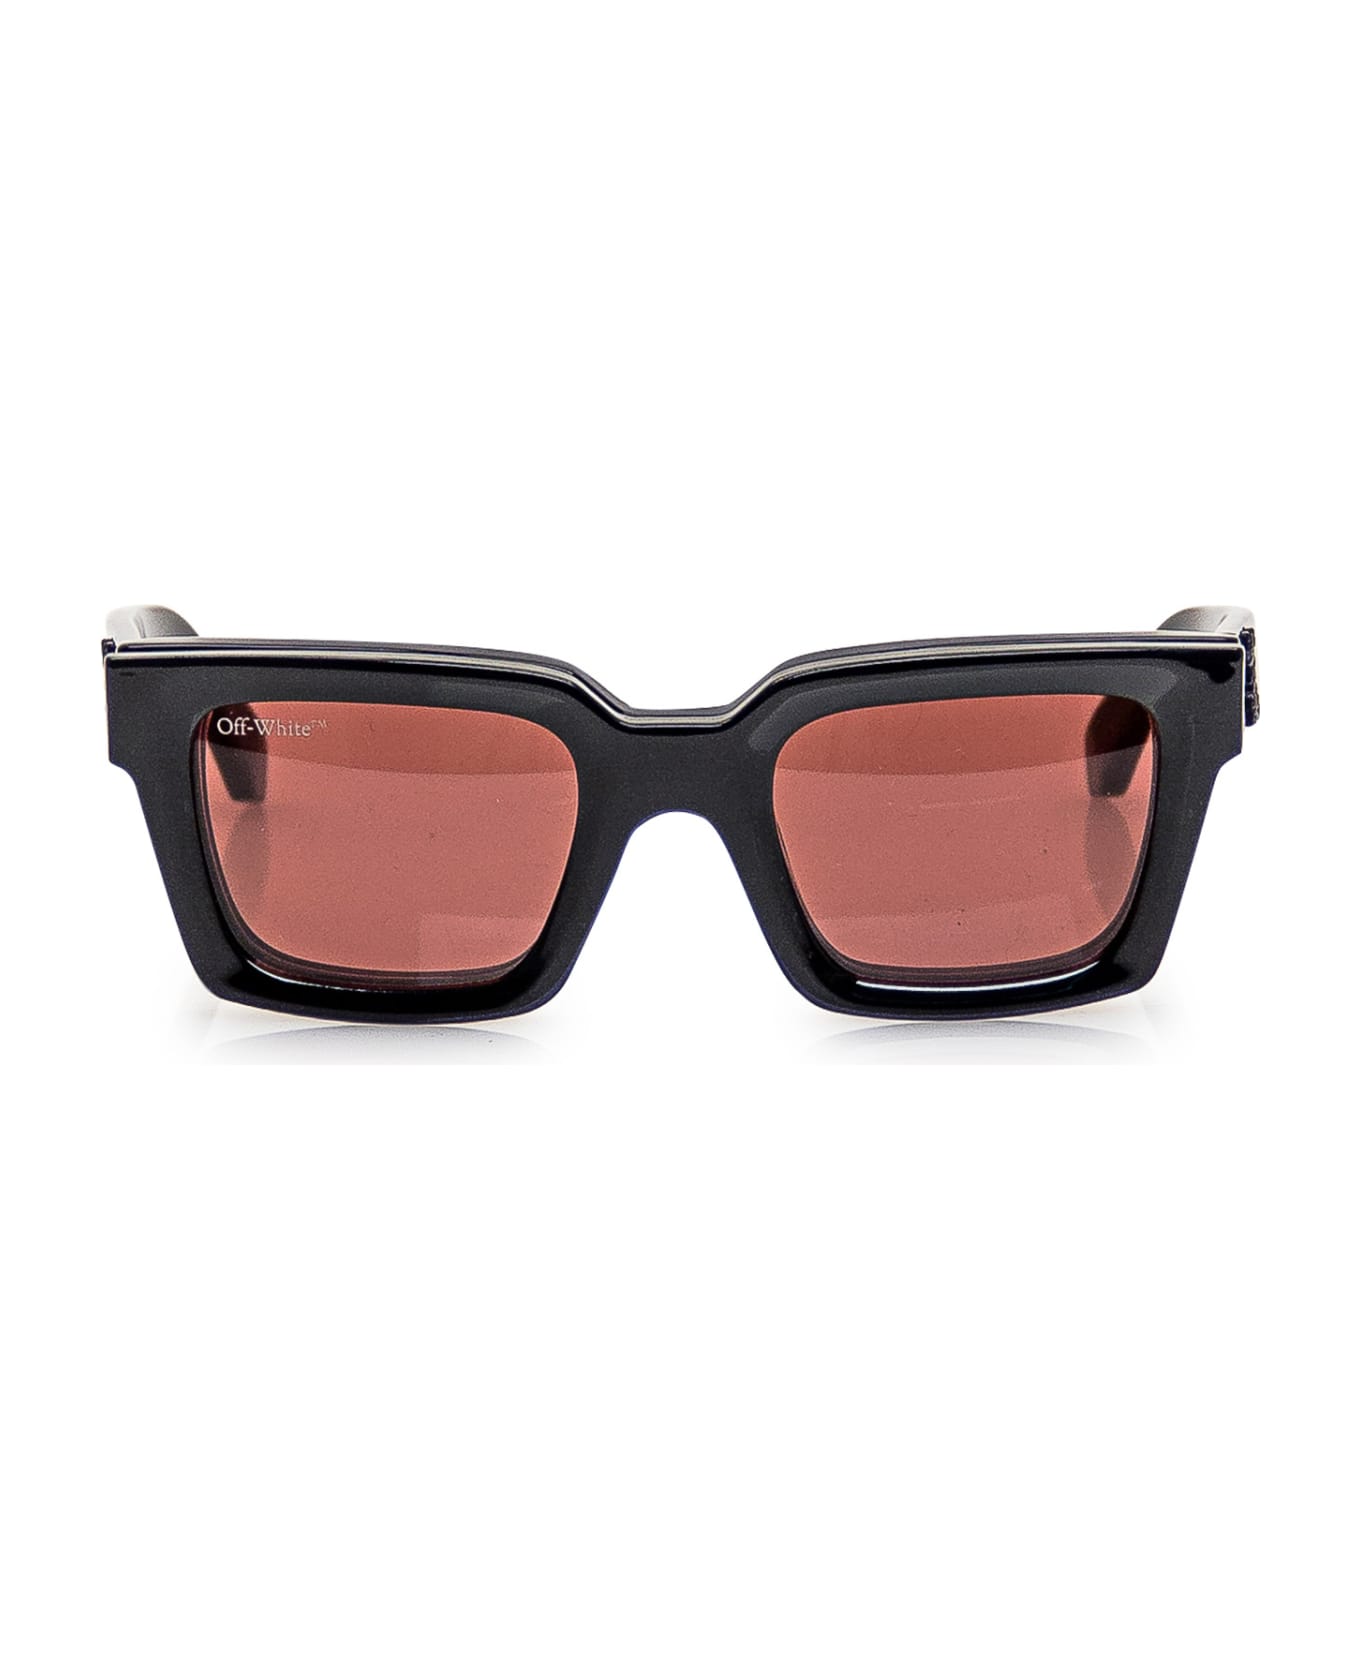 Off-White Clip On Sunglasses - 1060 BLACK BROWN